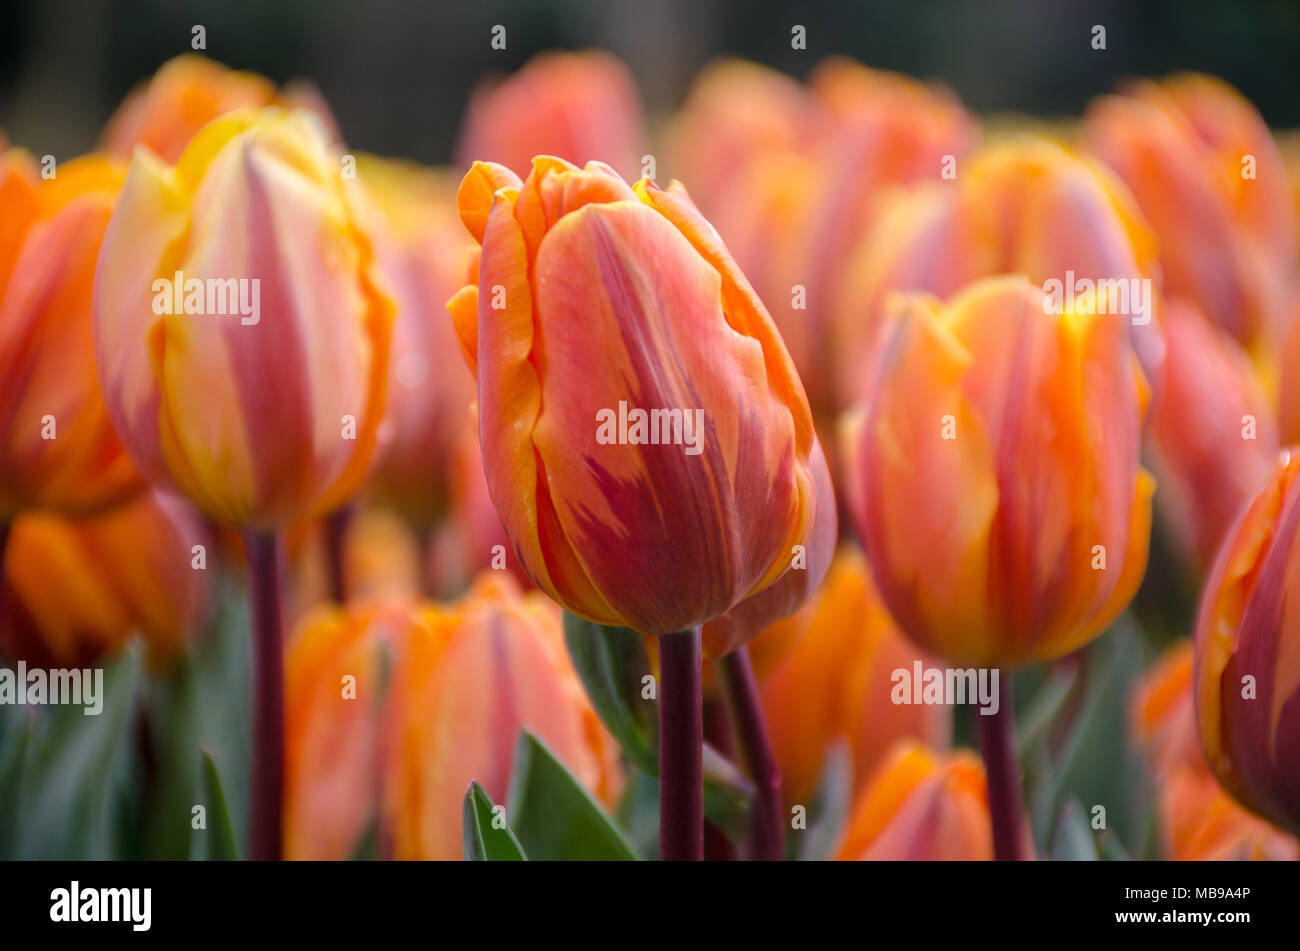 Orange and purple tulips Stock Photo